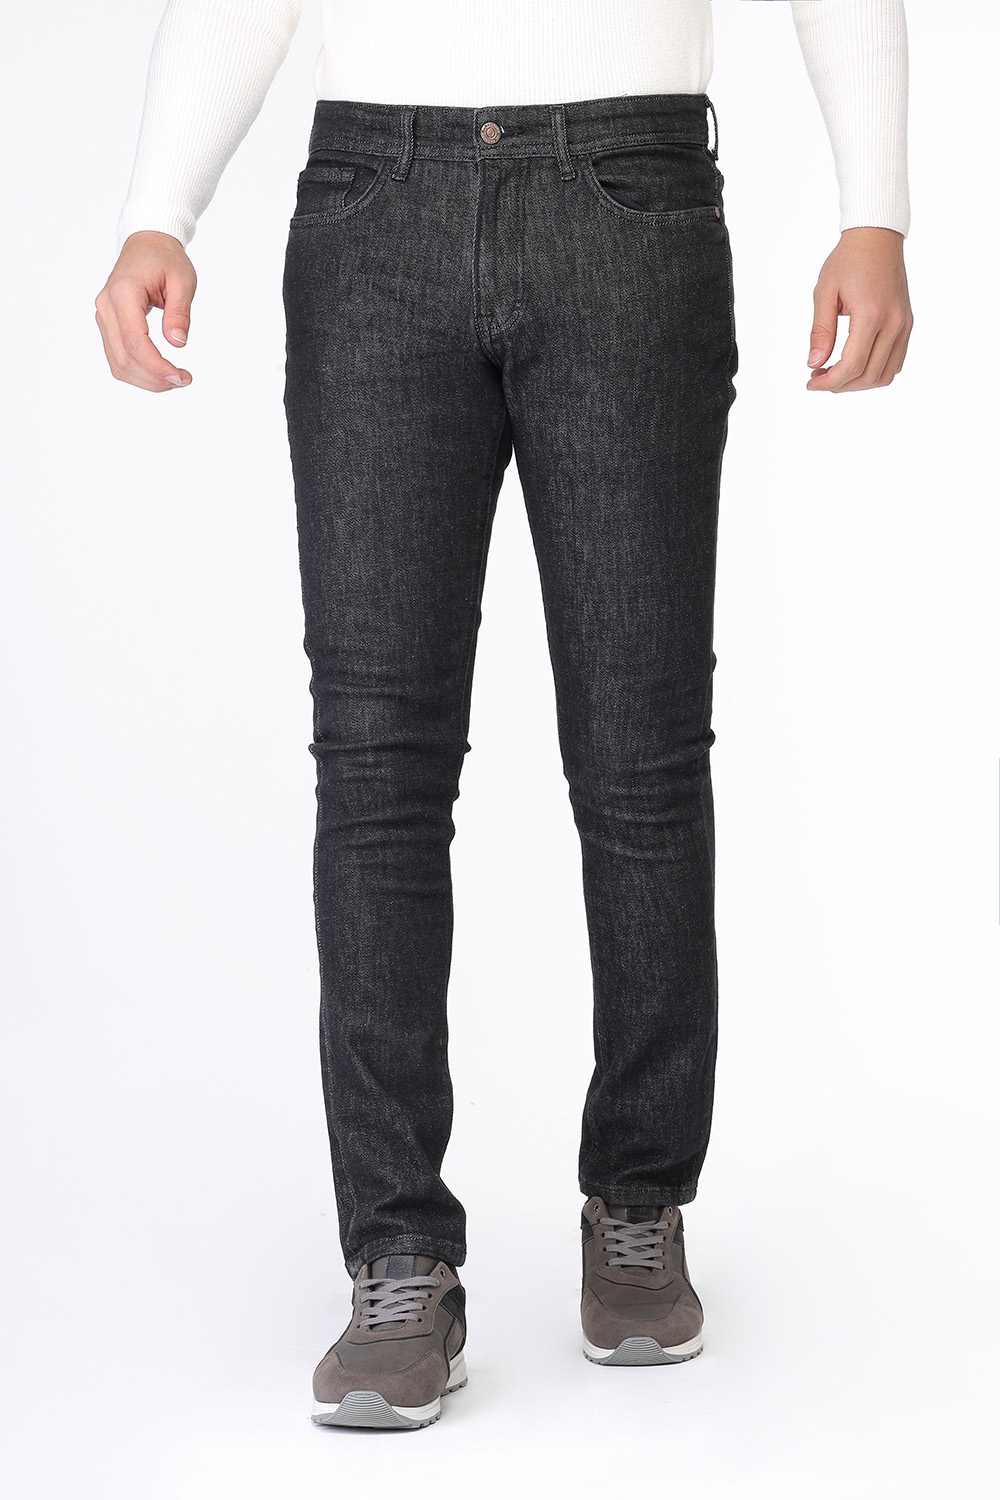 Rovga Mens Pants Stretch Skinny Skinny Jeans Casual Skinny Fashion Trousers  - Walmart.com